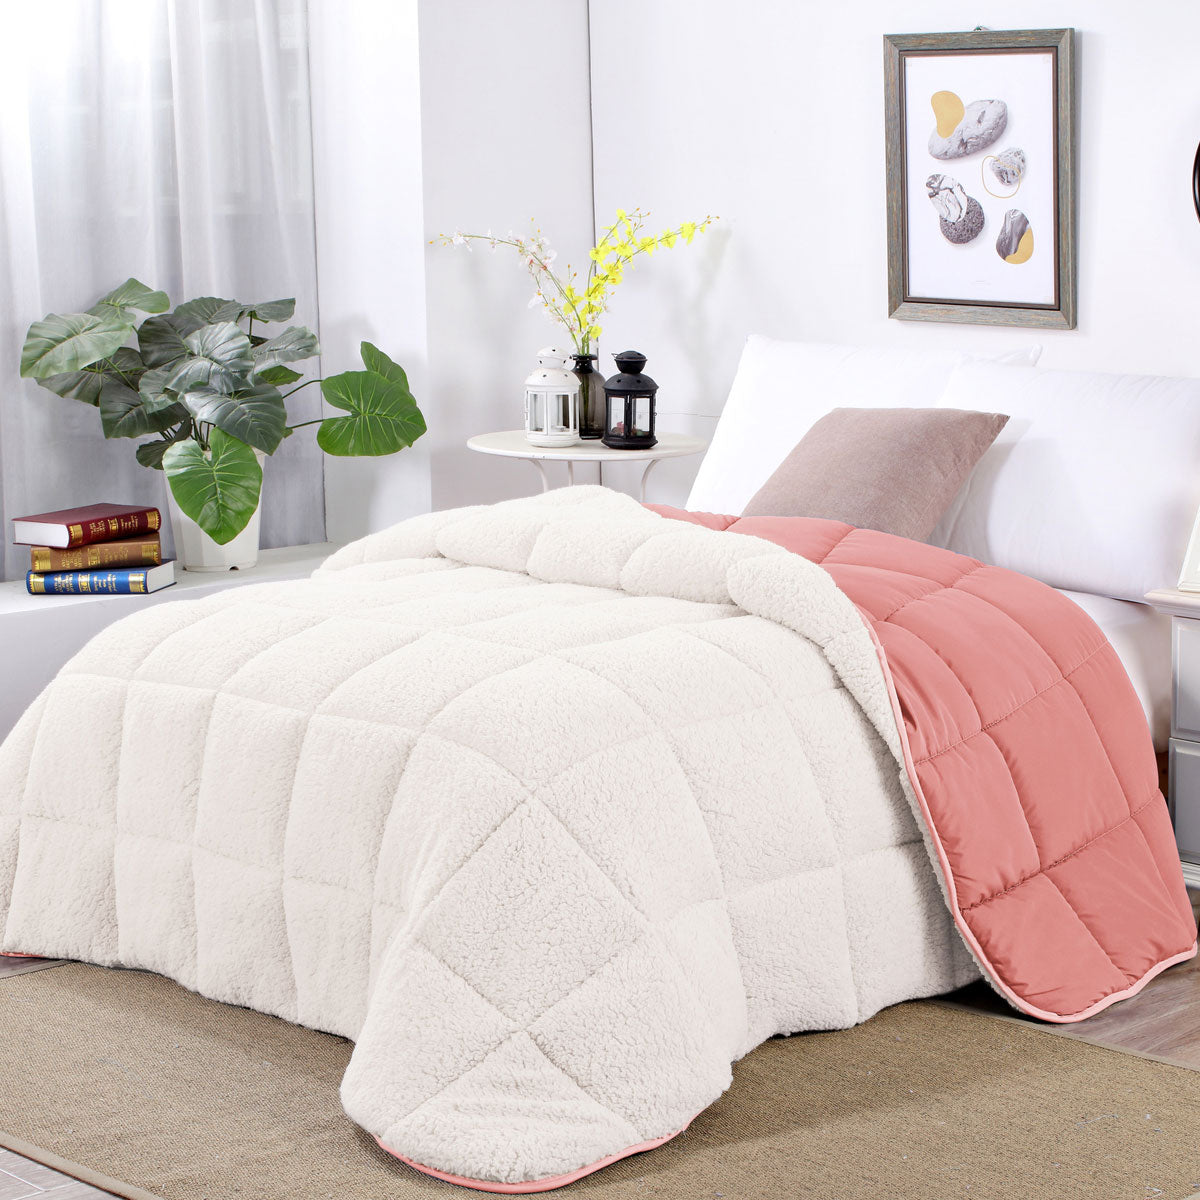 Double Shangri La Rose Tan Sherpa Fleece Reversible 3 Pcs Comforter Set - White / Pink